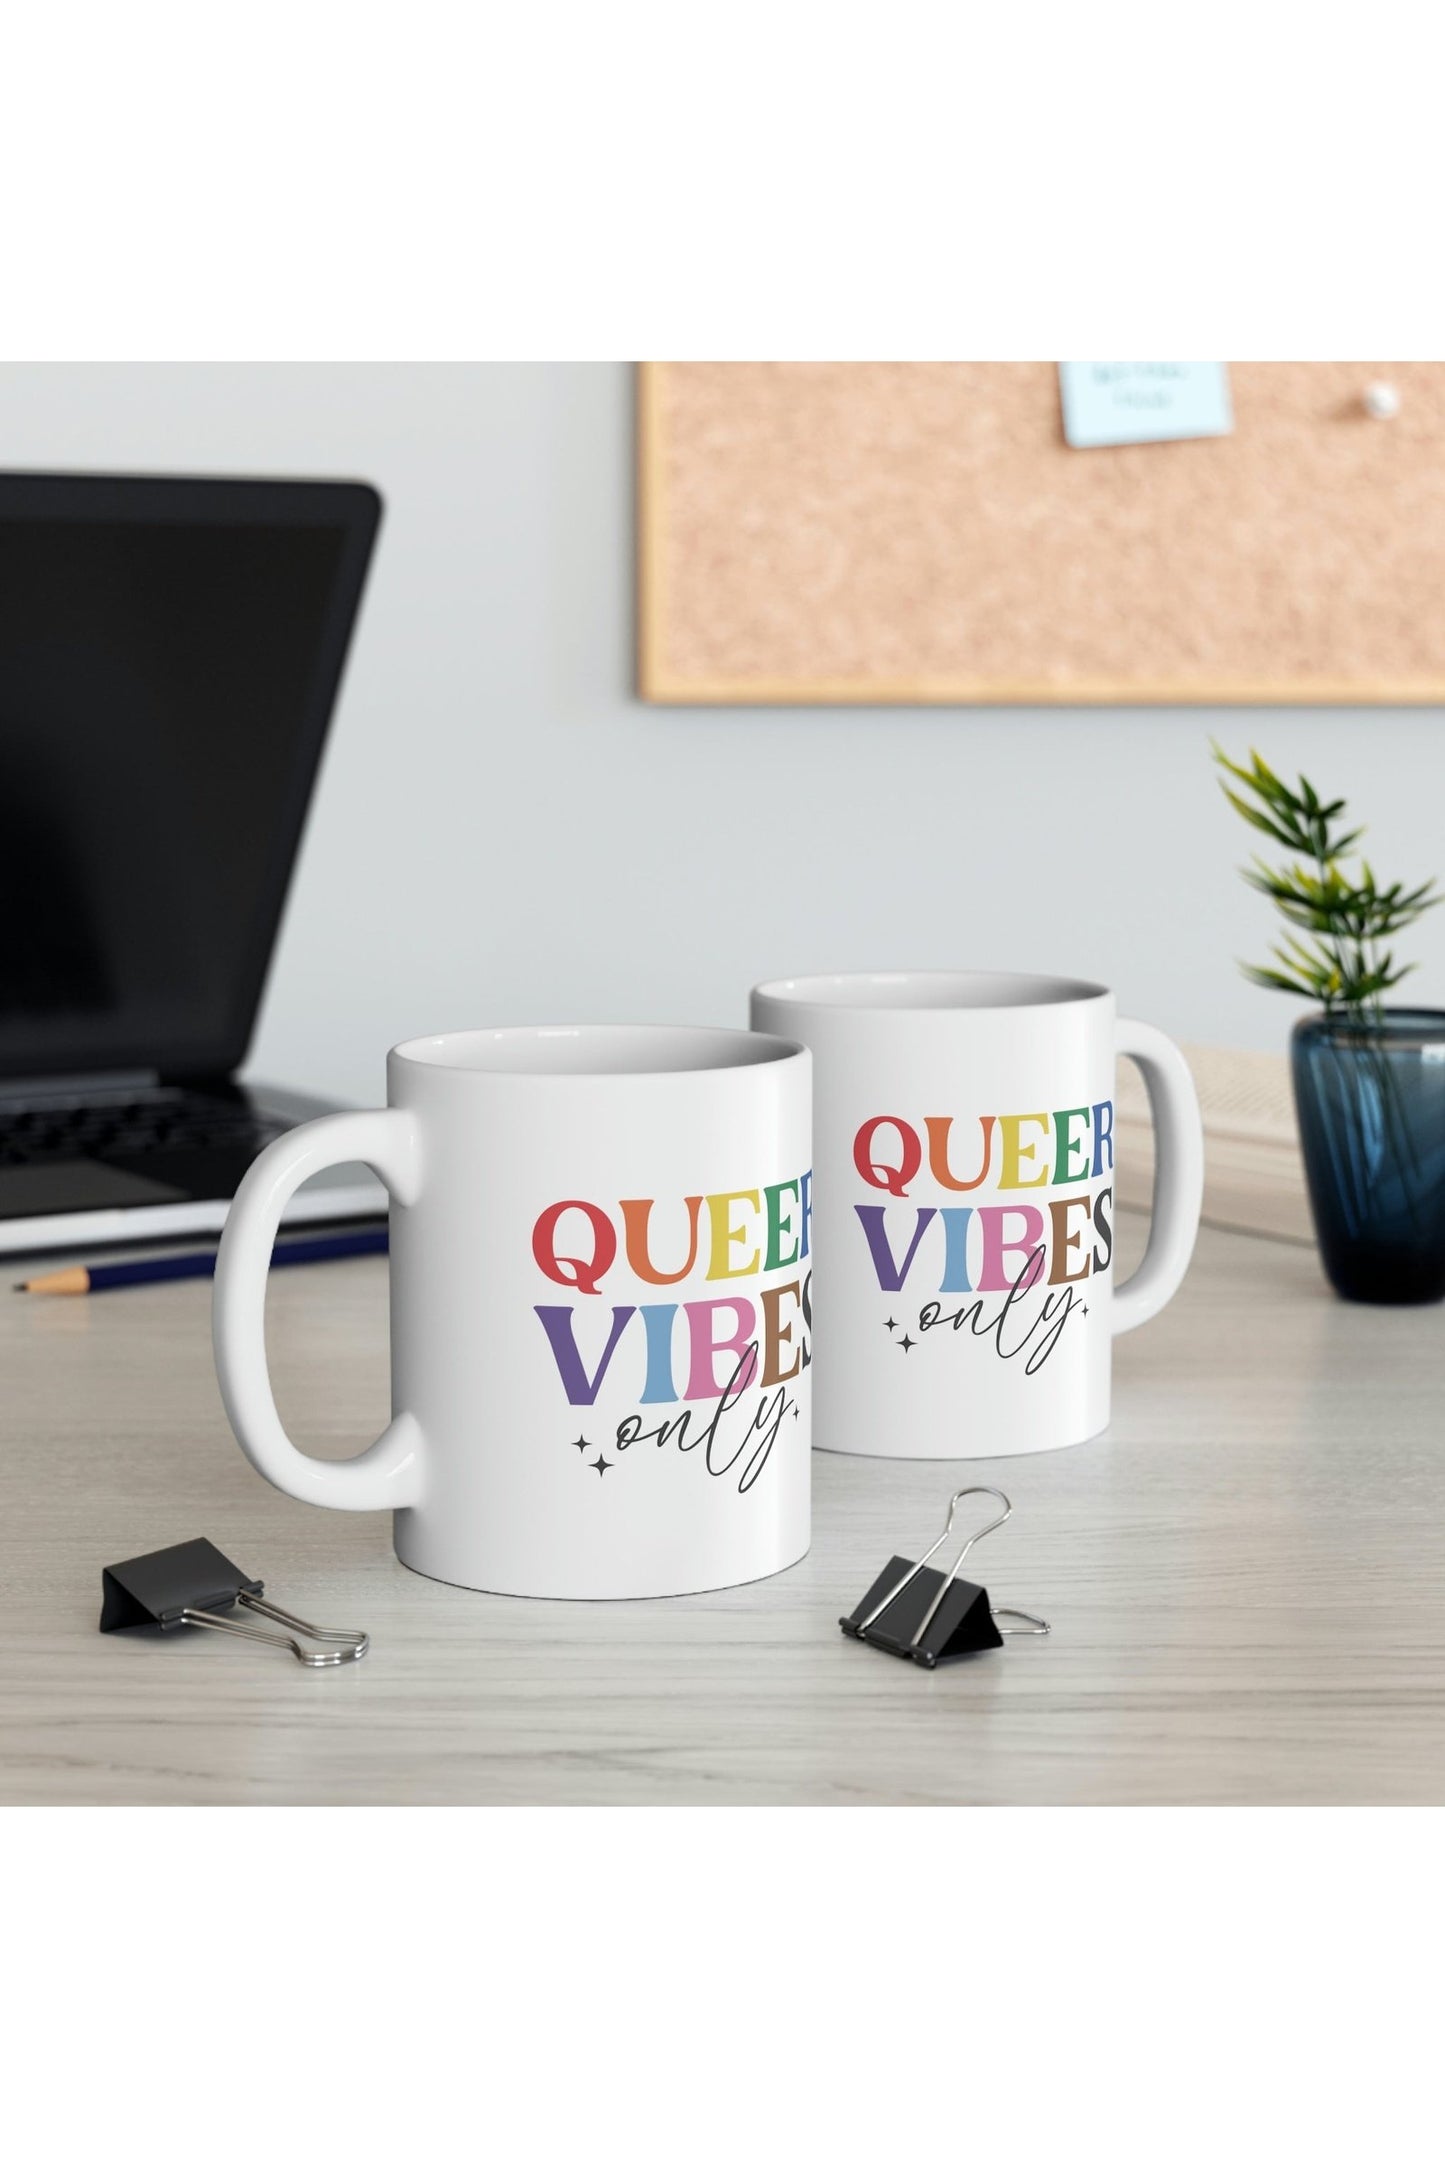 Queer Vibes Only Ceramic Mug 11oz